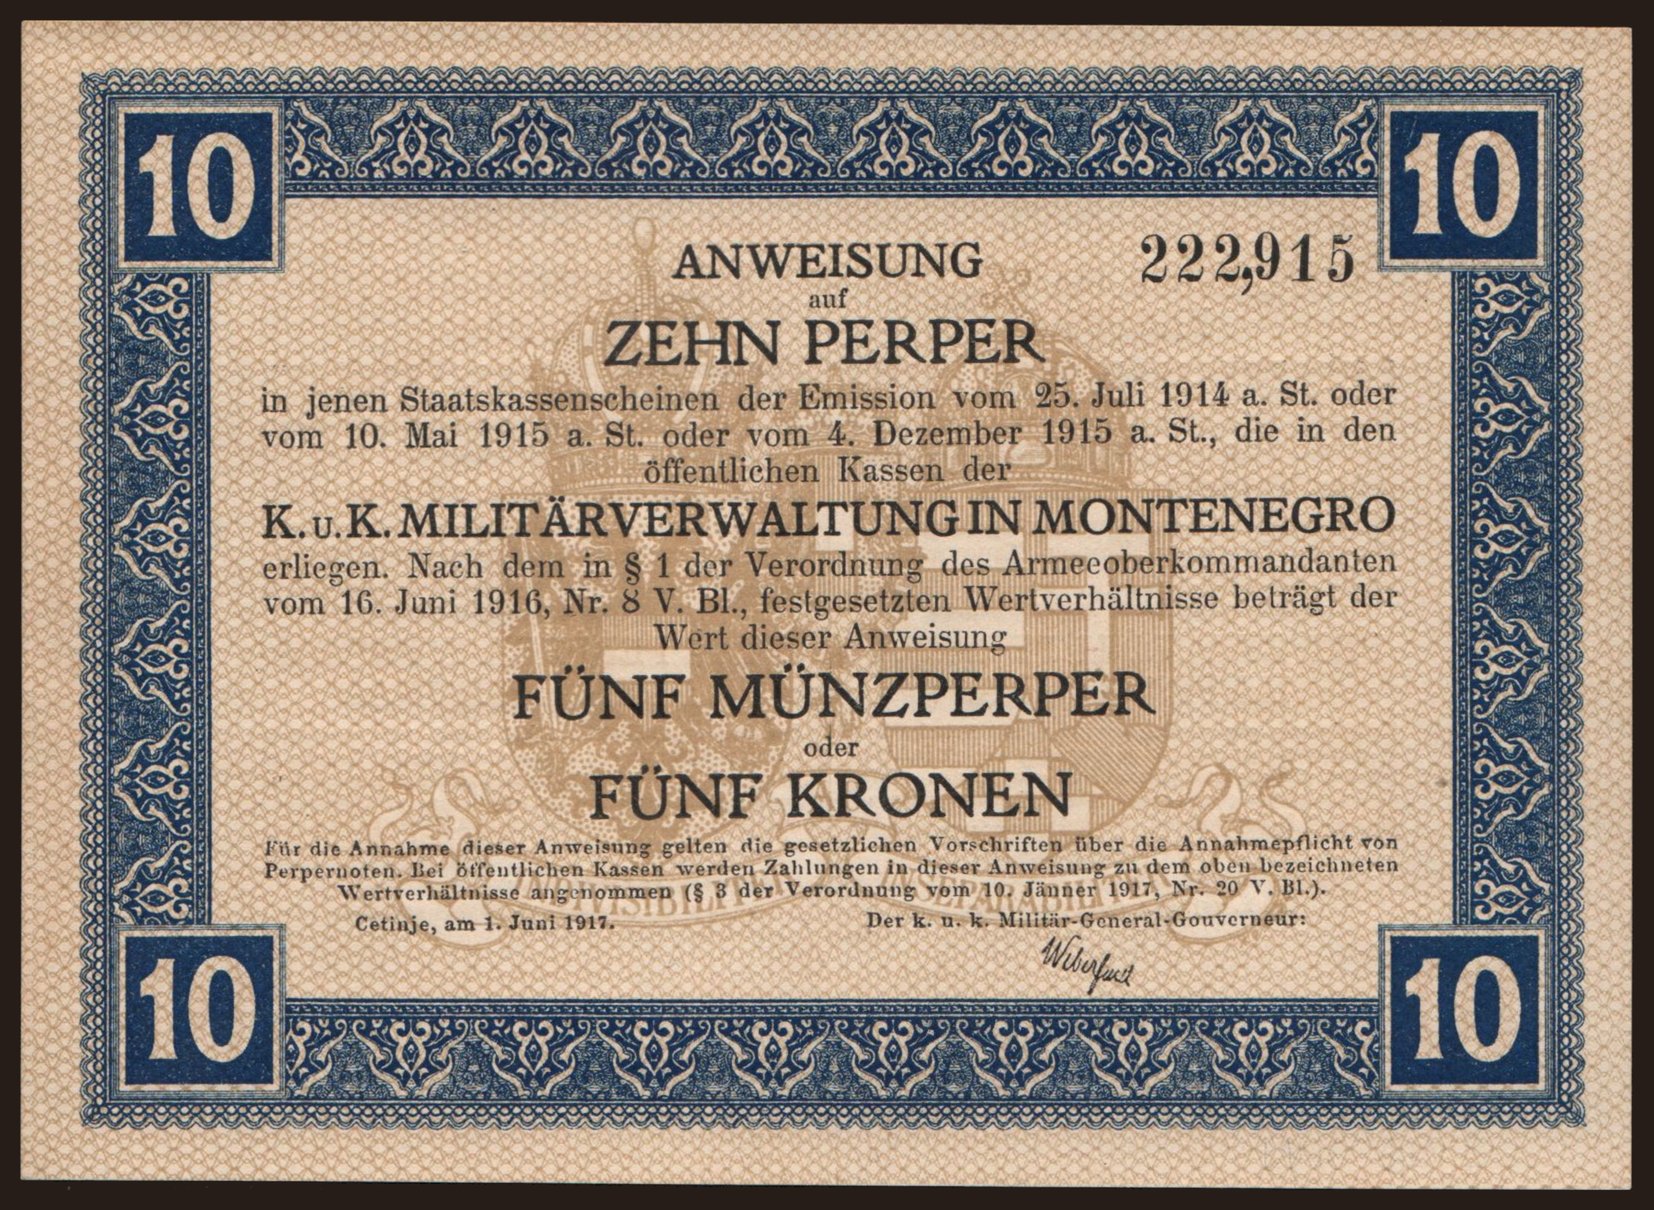 10 perper, 1917